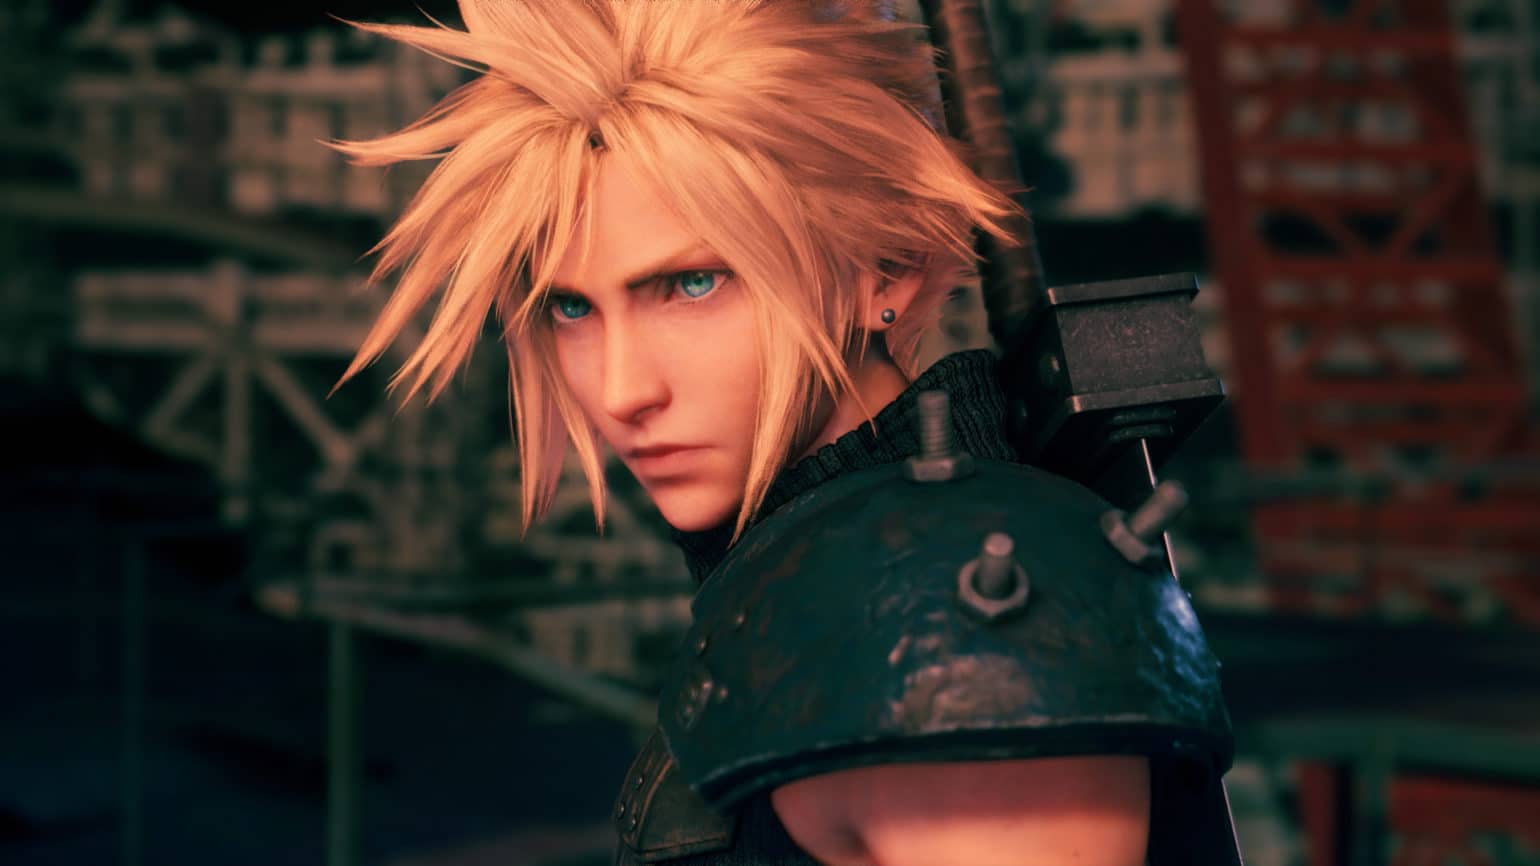 Final Fantasy VII Remake exclusif à la PlayStation 4 jusqu